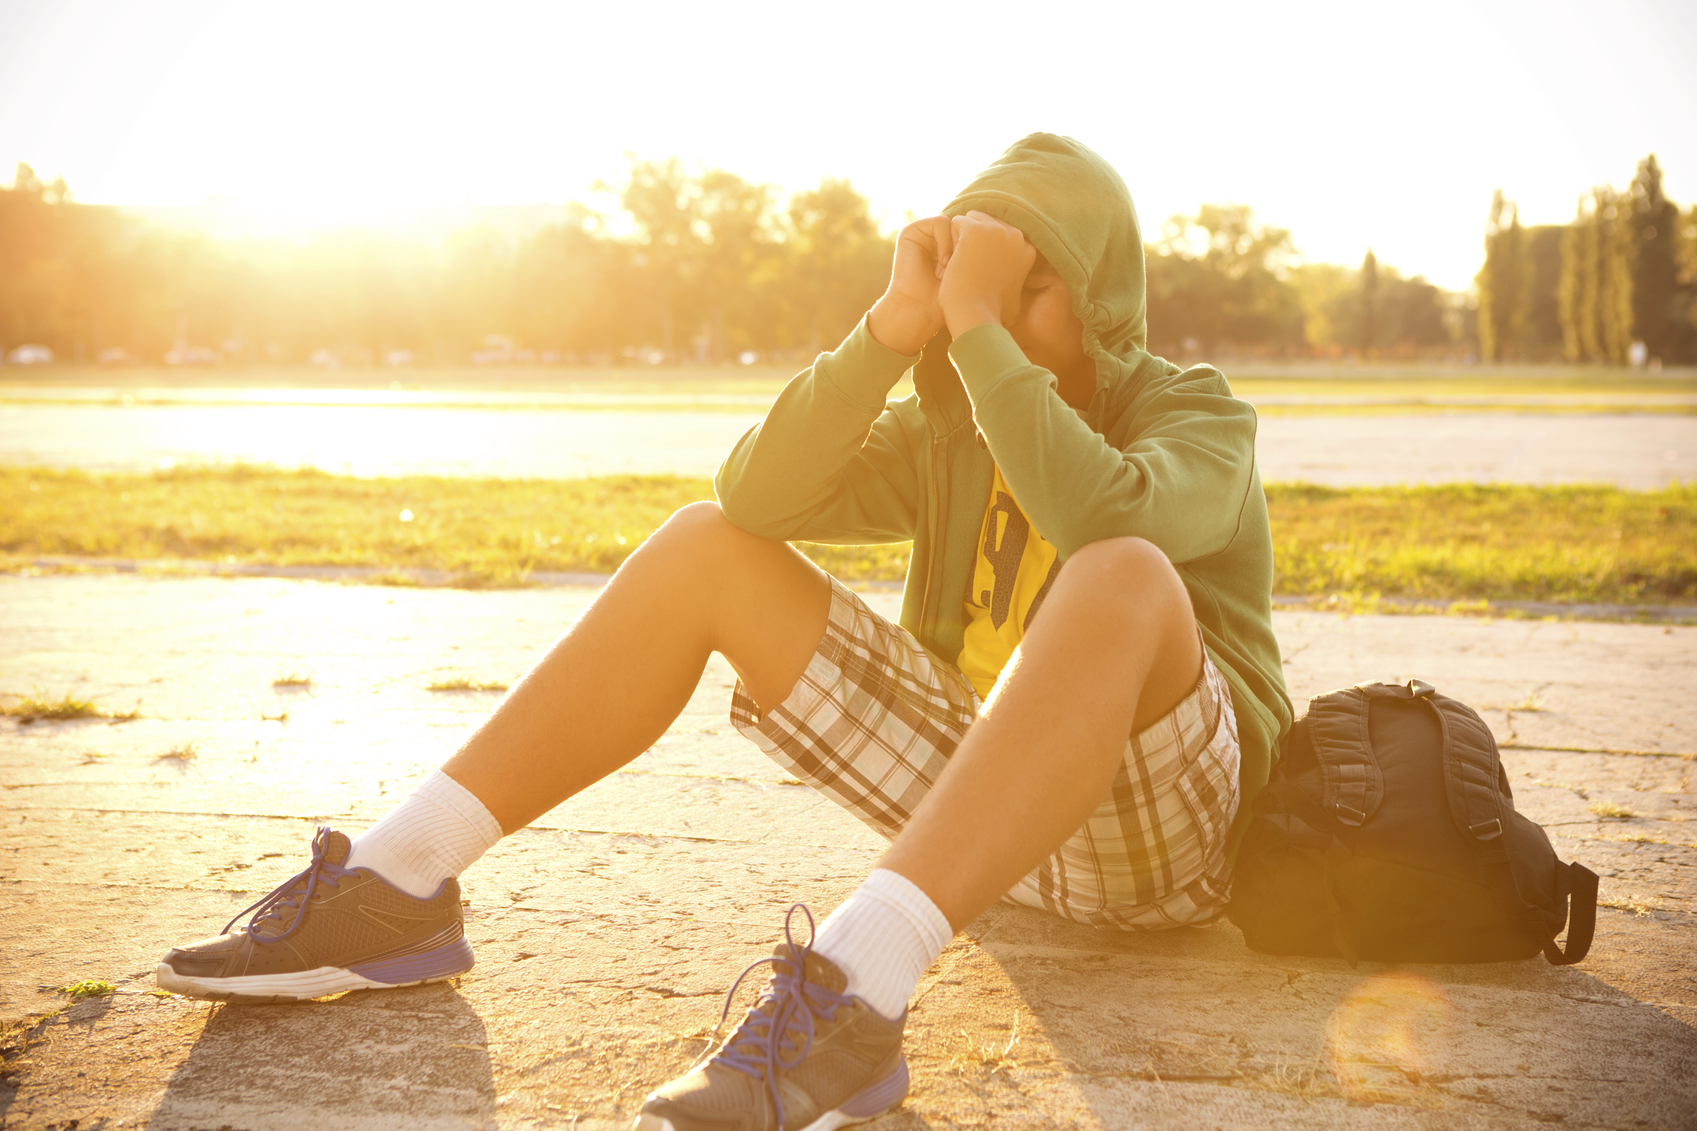 Teenage boy wearing hood sitting on ground